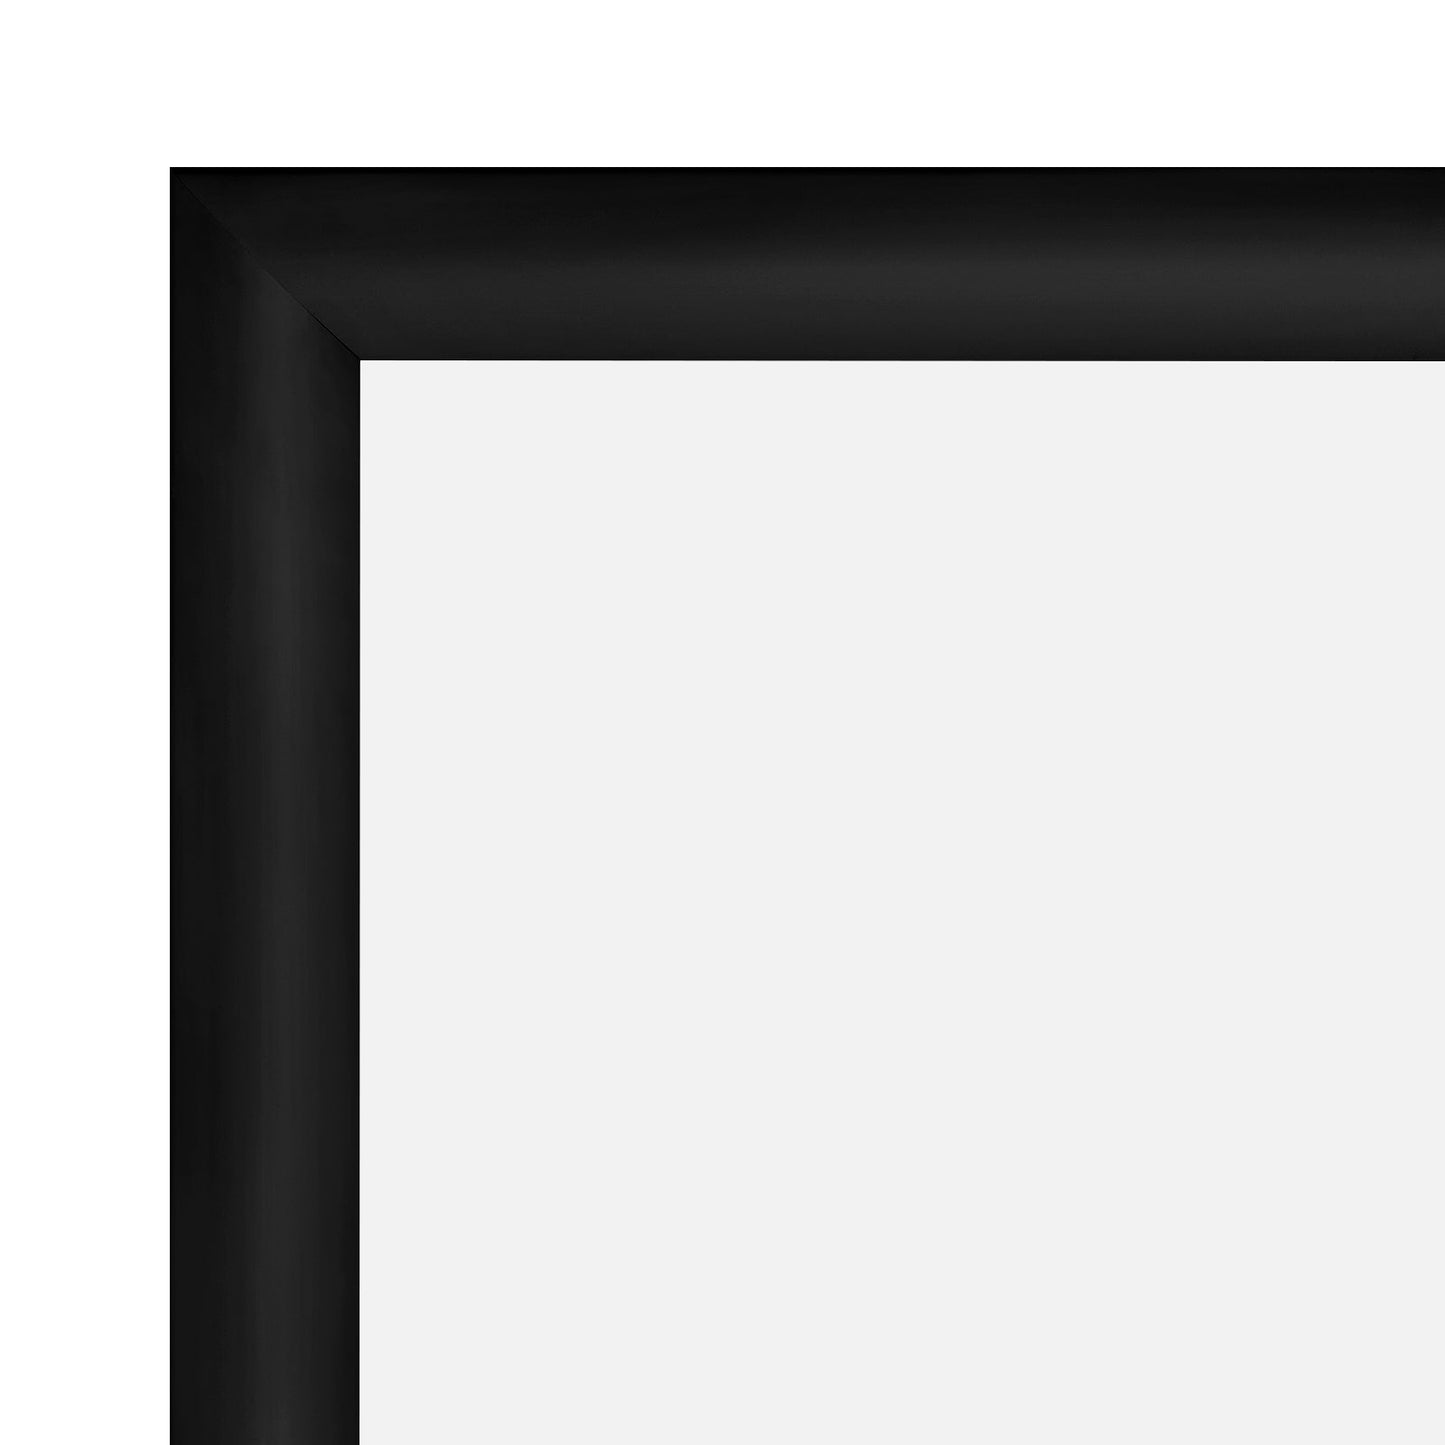 16x20 Black SnapeZo® Snap Frame - 1.2" Profile